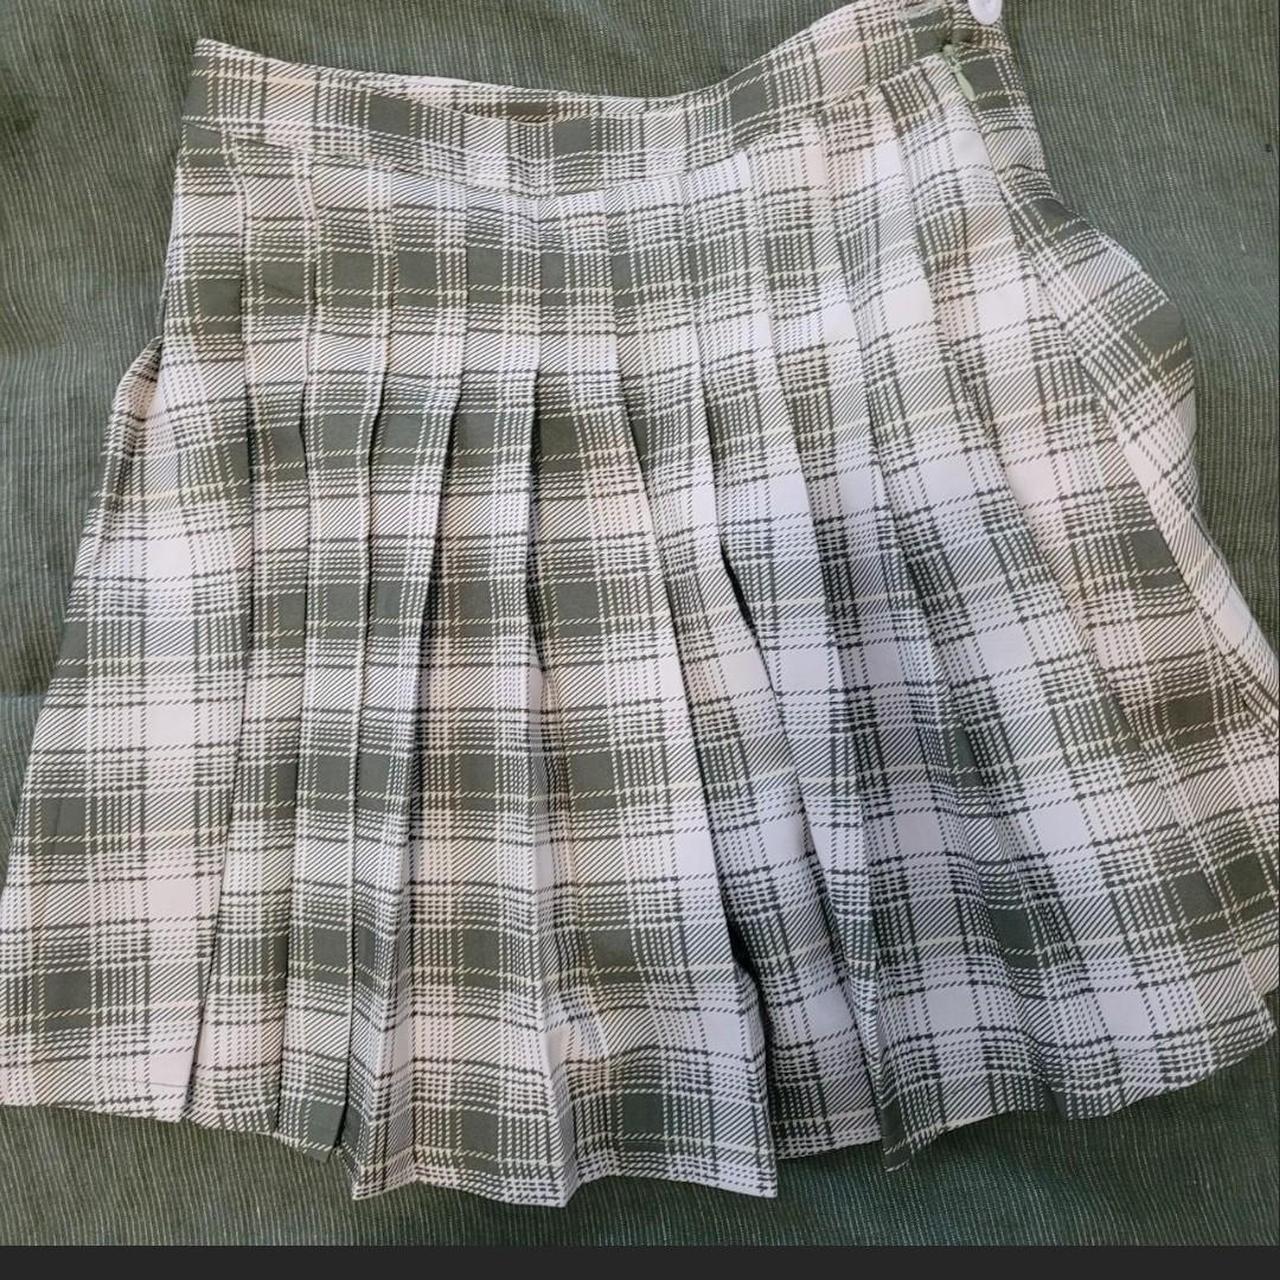 Green and white checkered skirt ☘️ Unlabelled brand,... - Depop